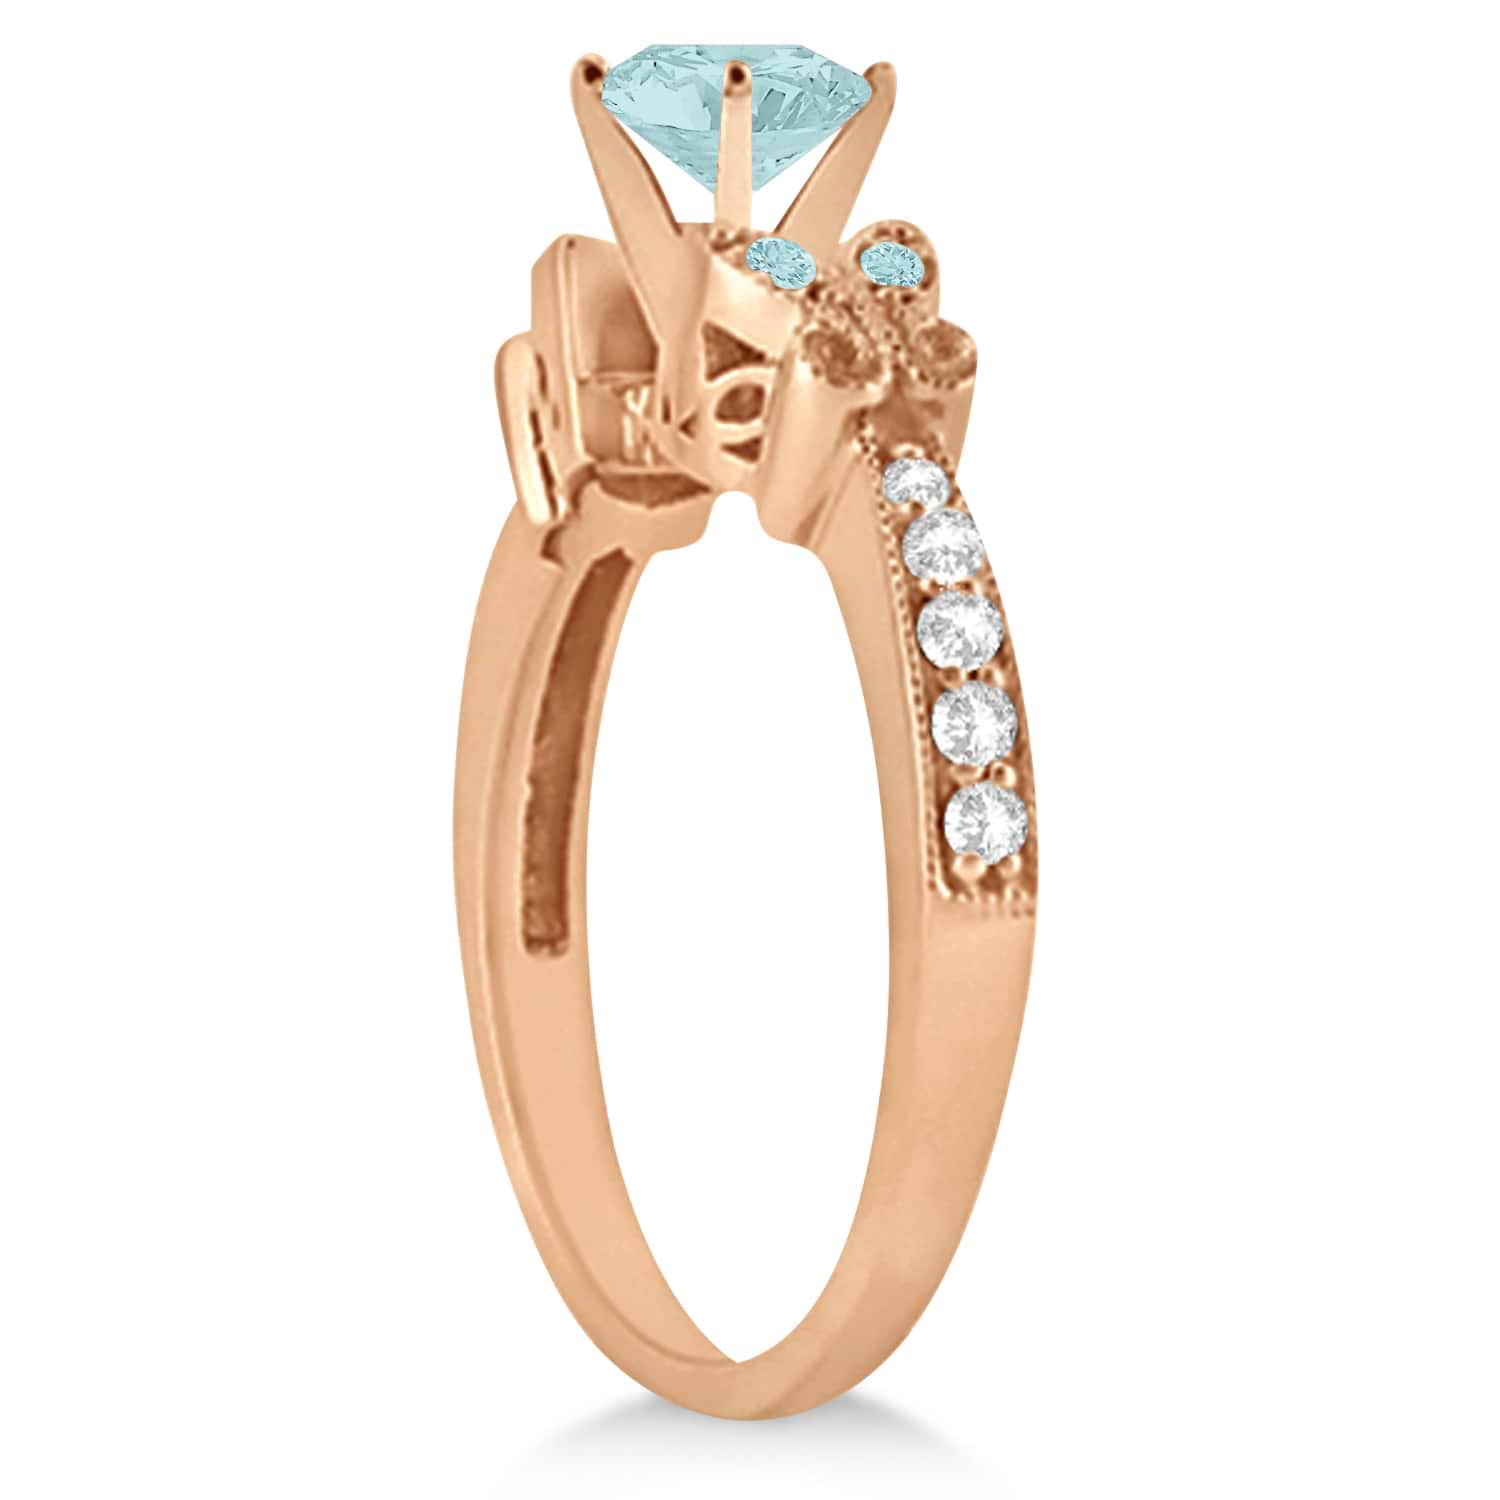 Preset Butterfly Aquamarine & Diamond Engagement Ring 18K Rose Gold (1.83ct)